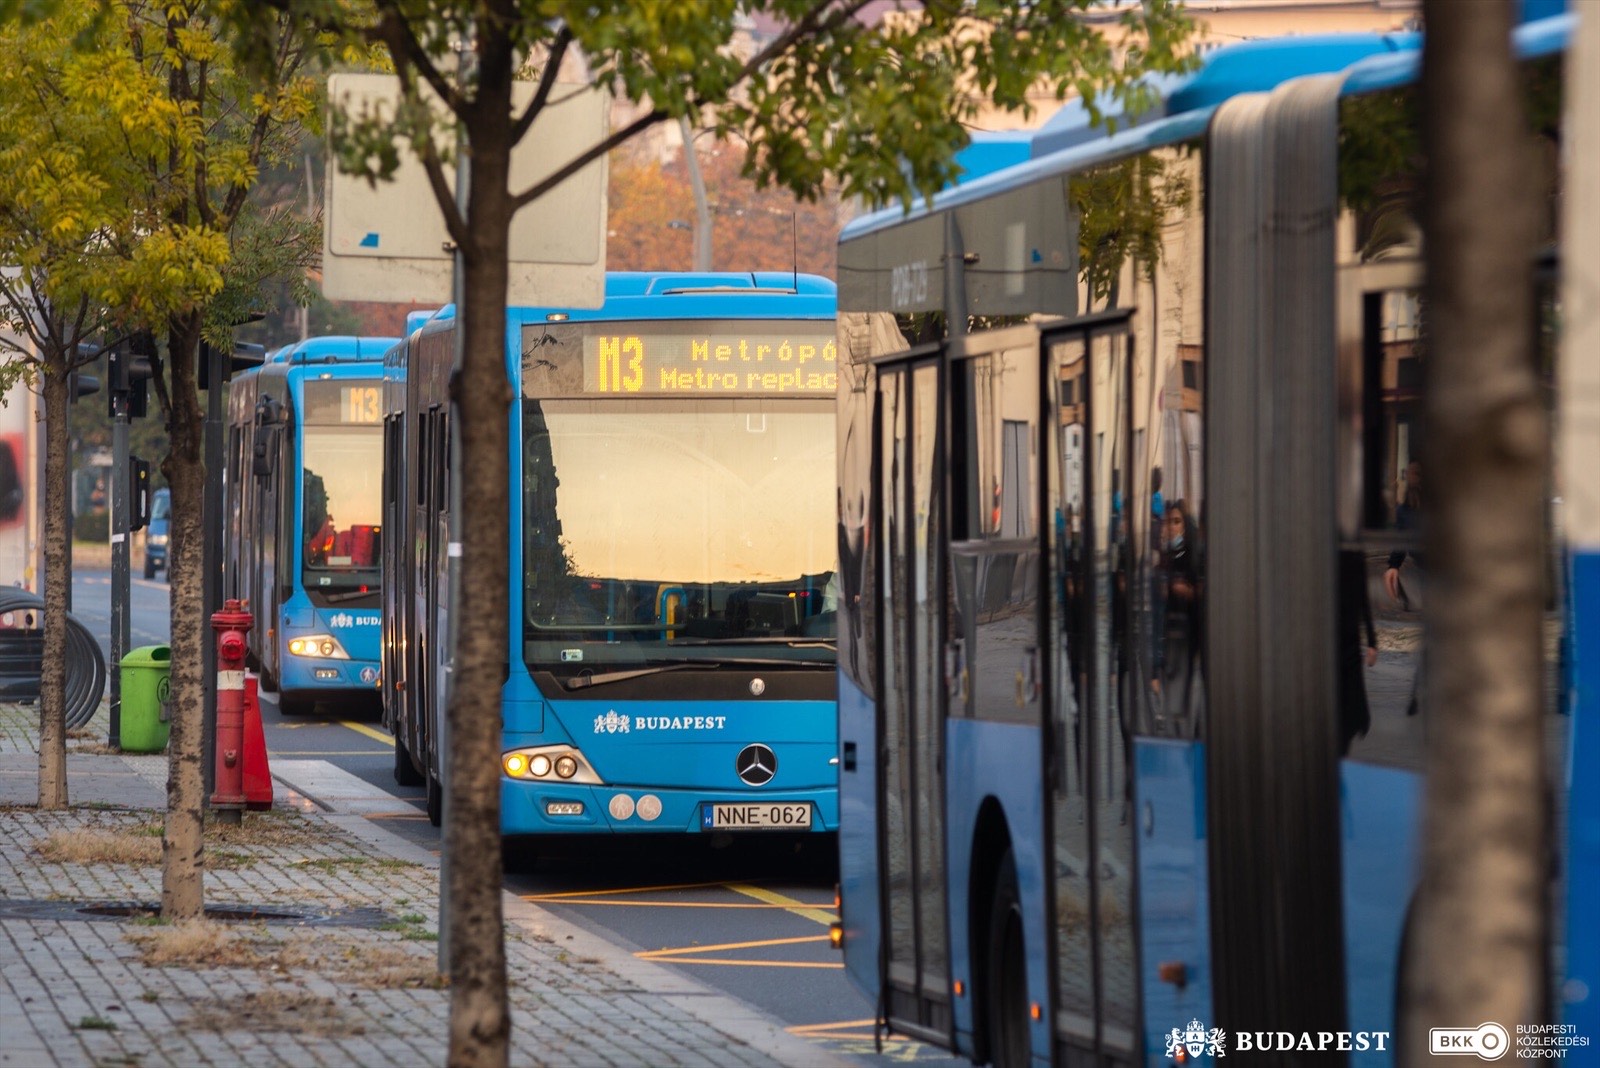 m3 автобус метро будапешт